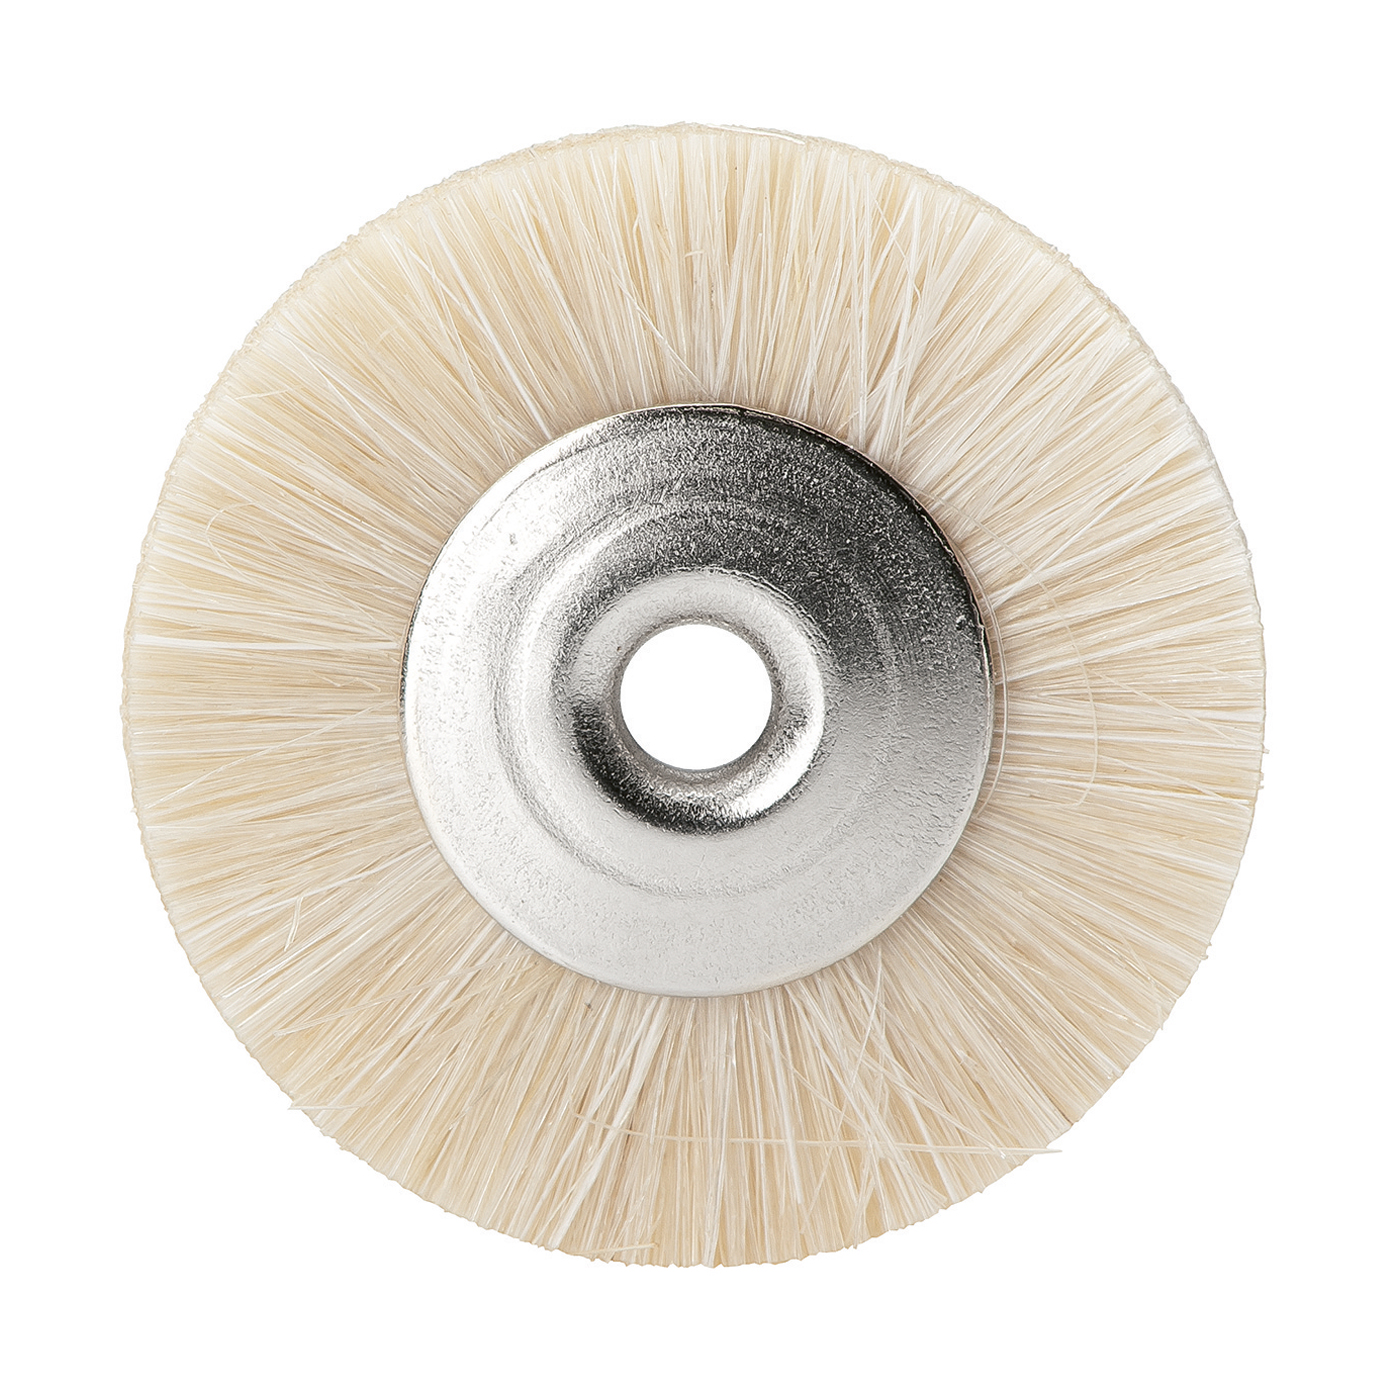 Mini Brushes, Wheels, Goat Hair, White, ø 19 mm - 12 pieces